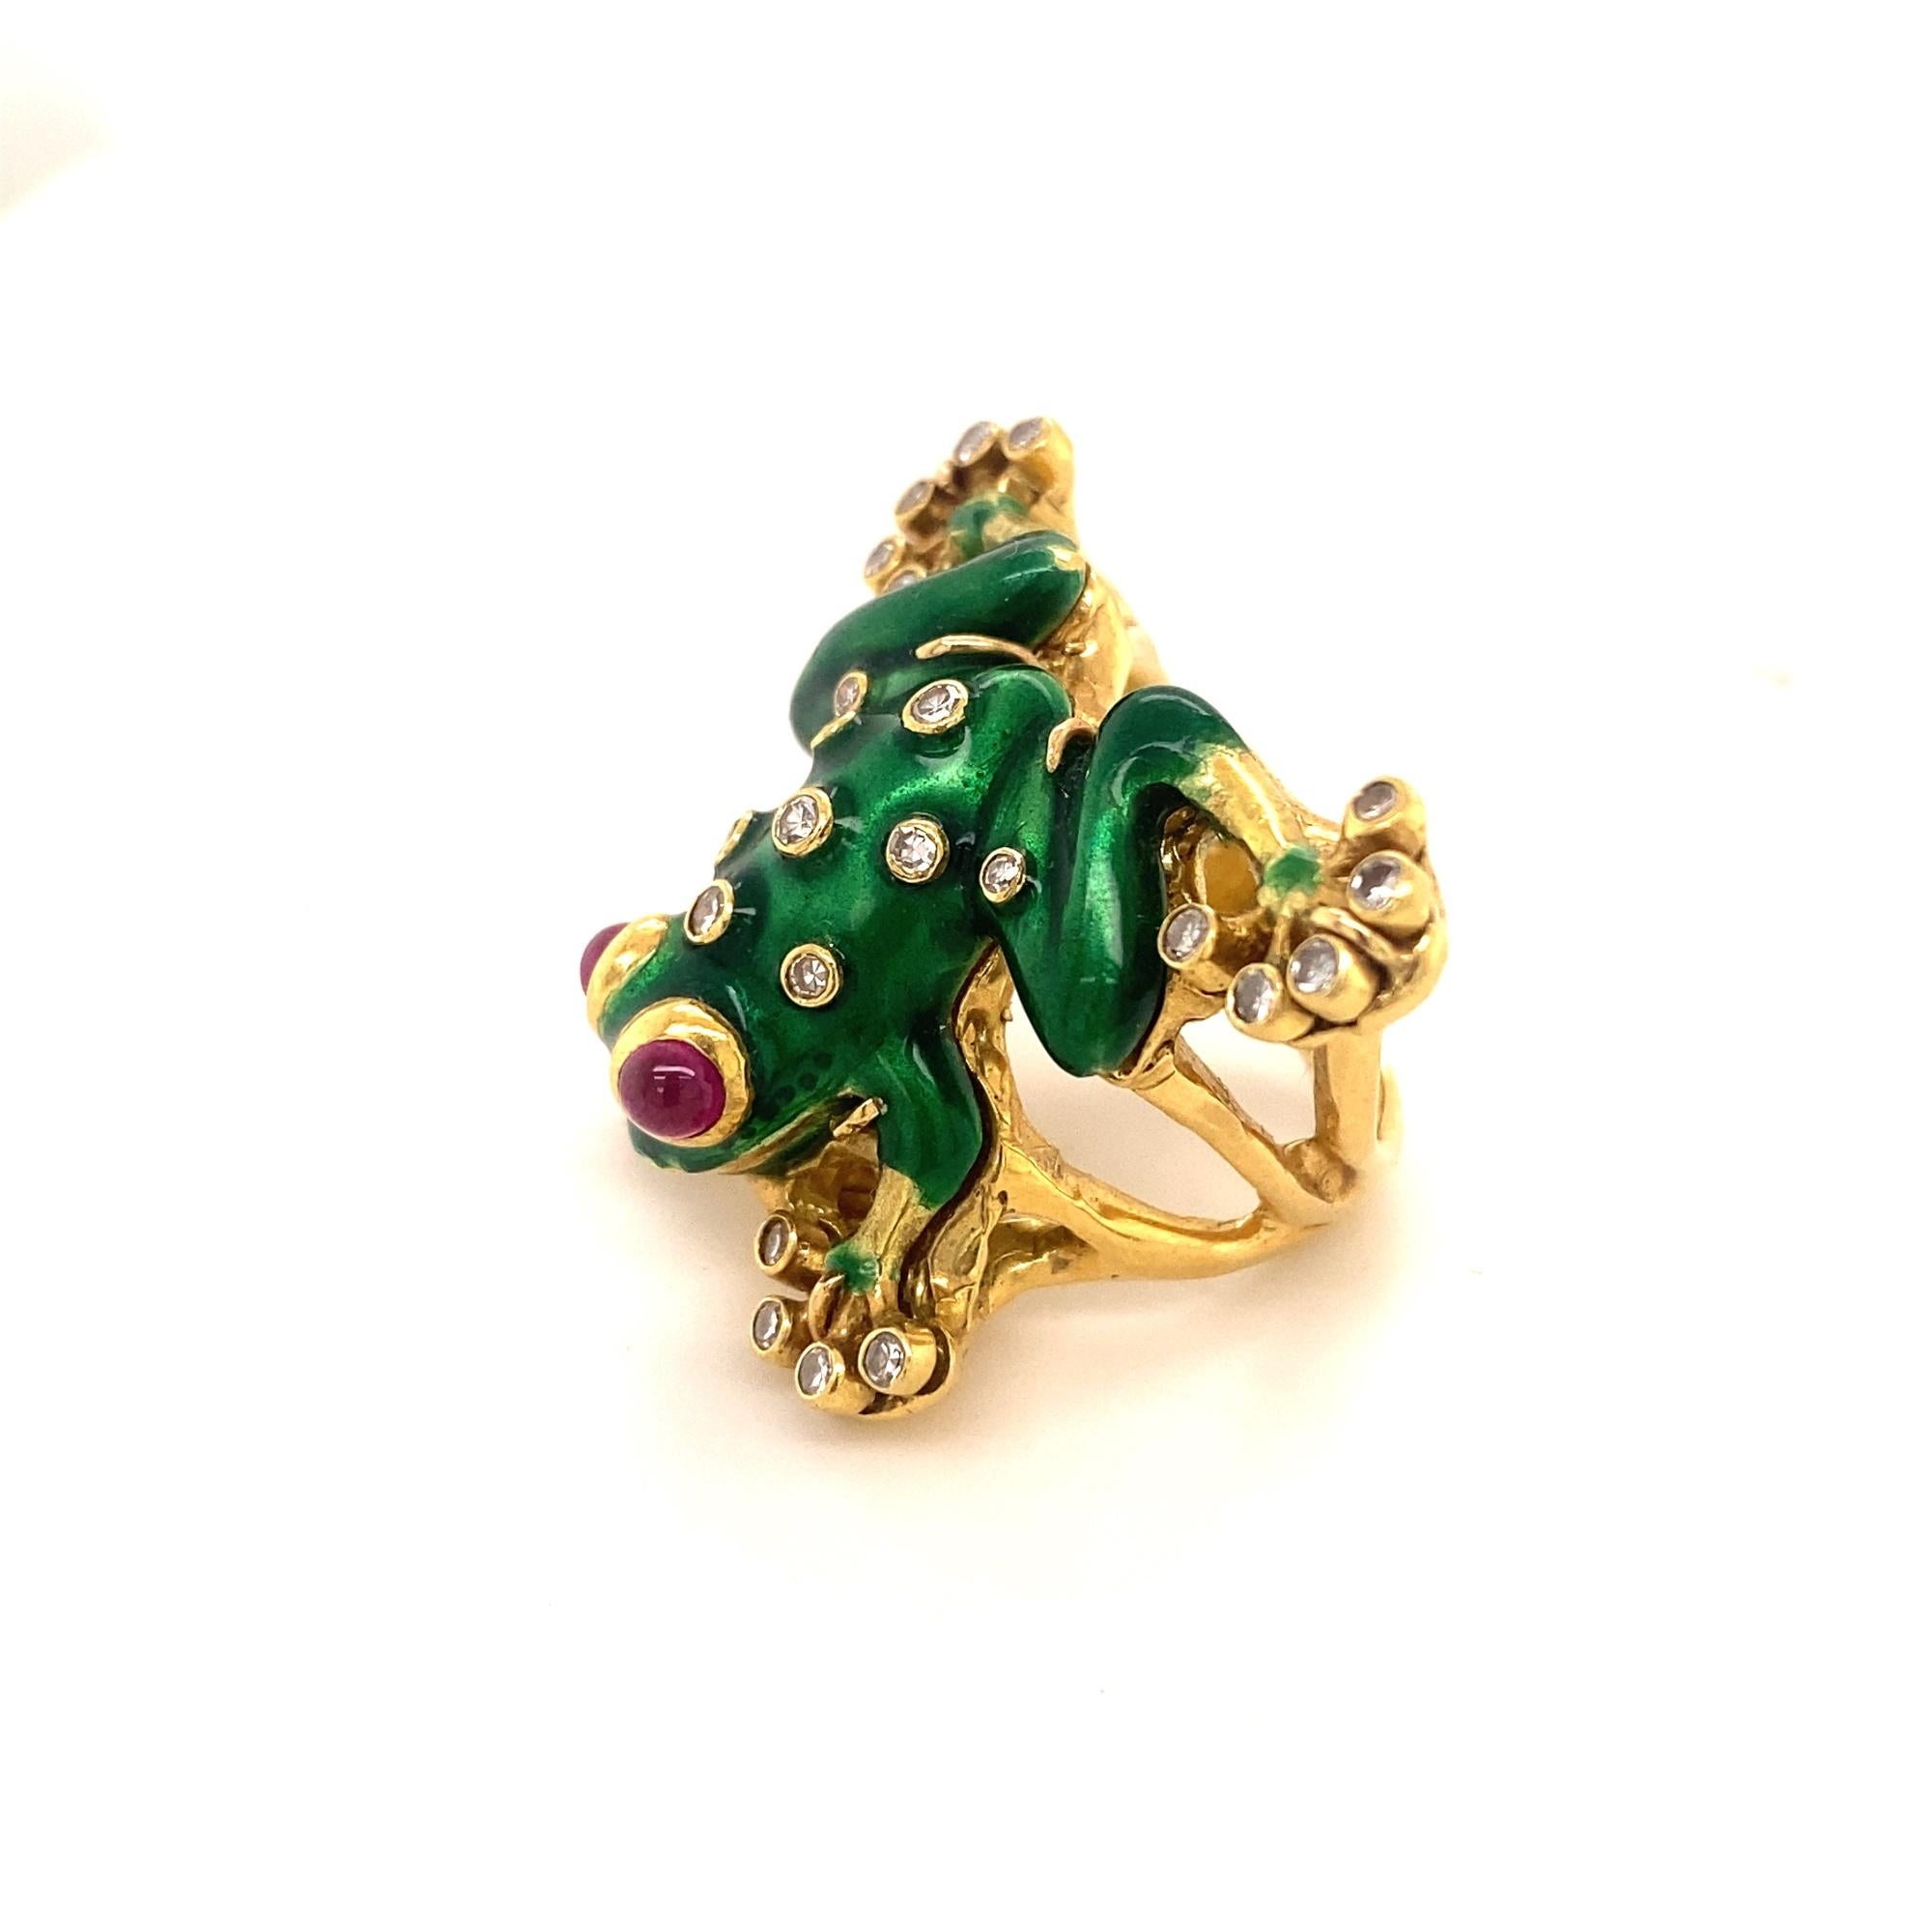 Brilliant Cut Vintage Ruby Eye Diamond Green Enamel Frog Ring 18K Yellow Gold